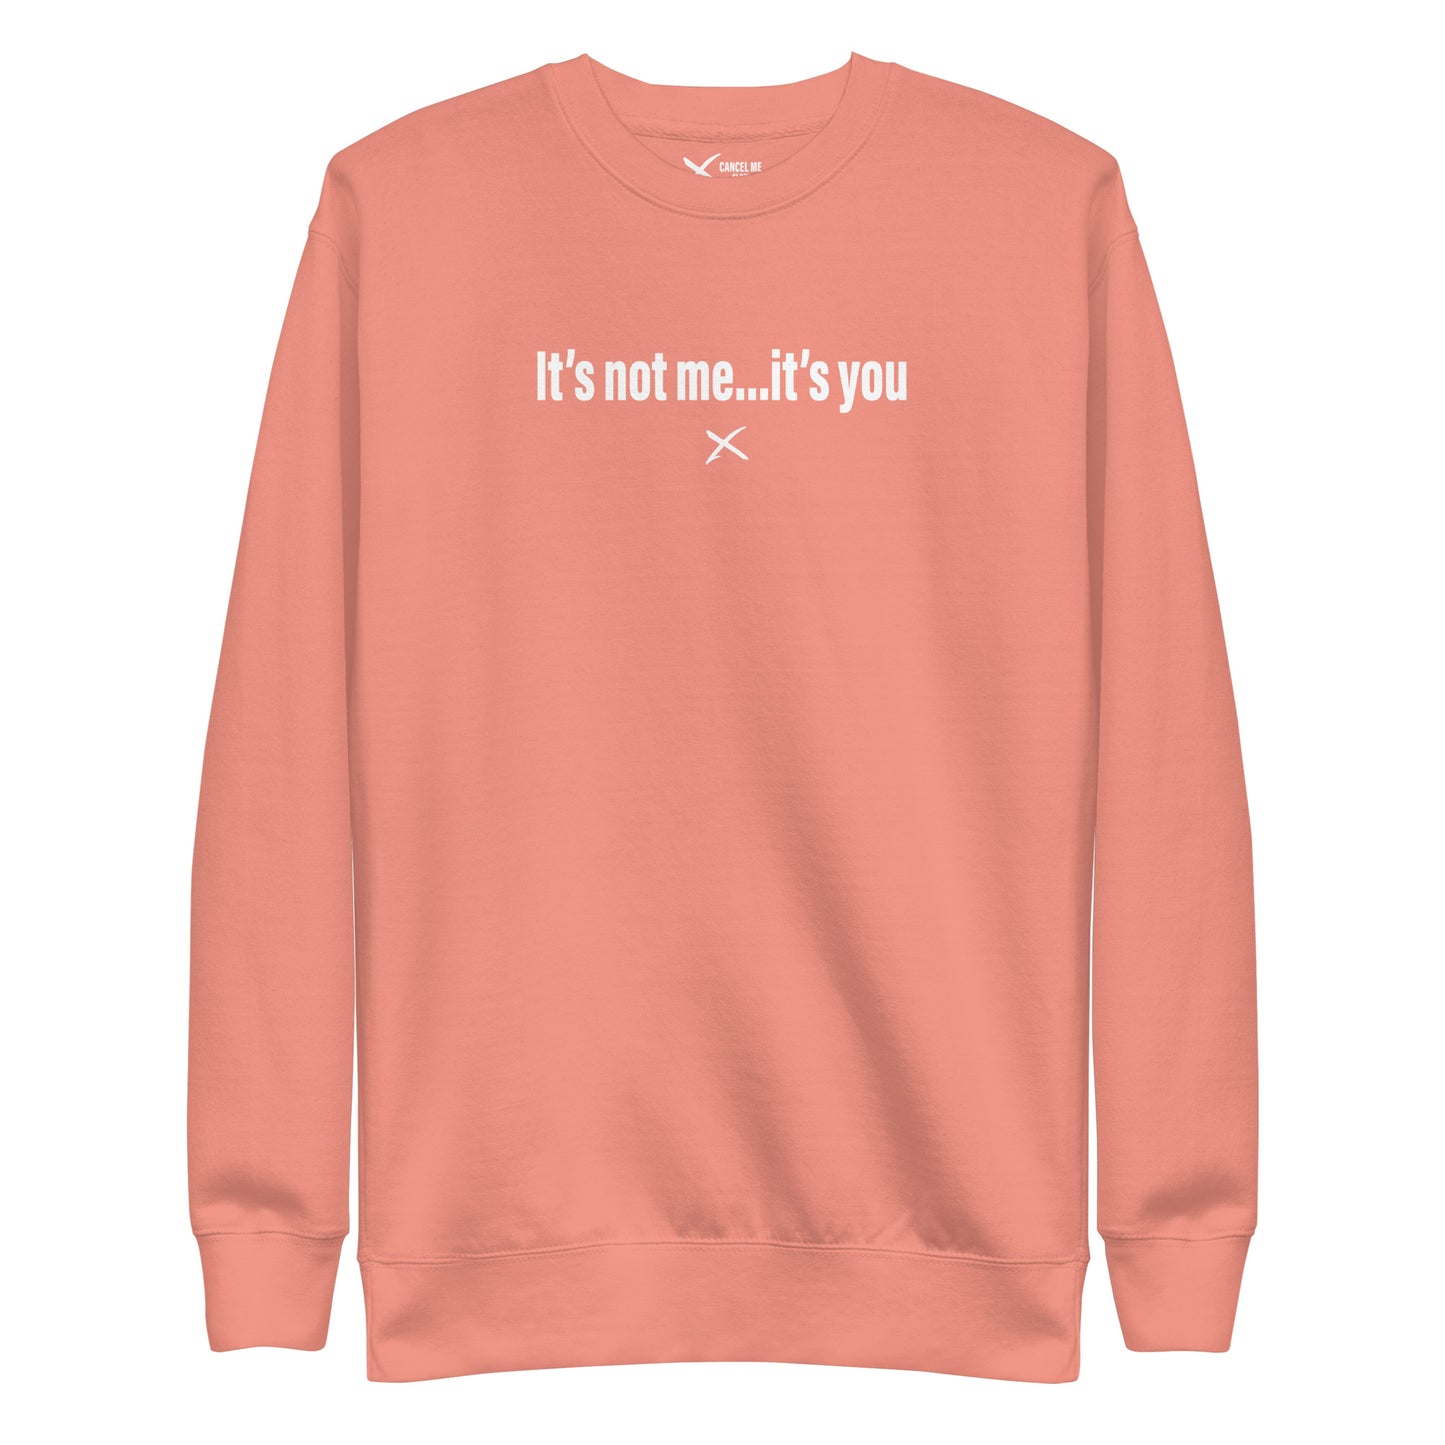 It's not me...it's you - Sweatshirt